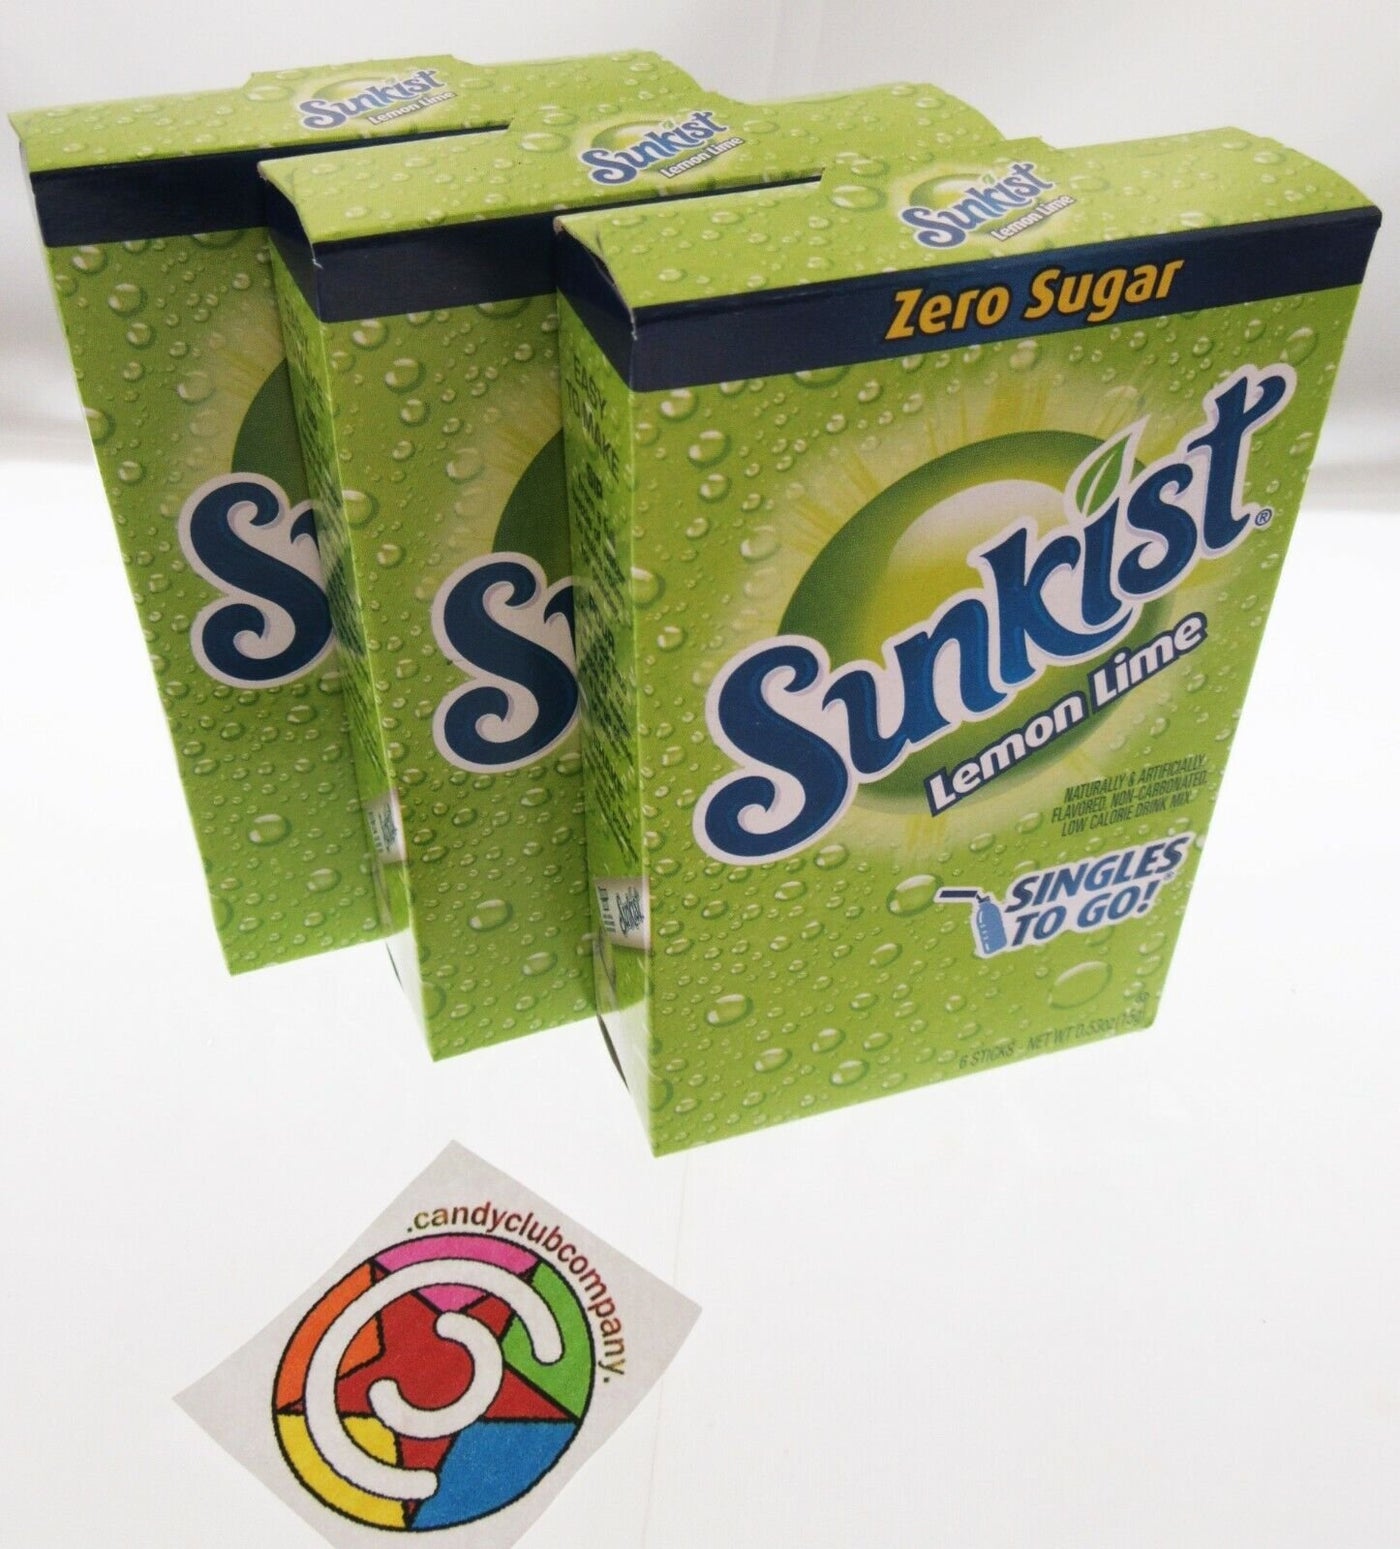 Sunkist Lemon Lime ~ Packets ~ Zero Sugar Free ~ Drink Mix ~ 3 Boxes